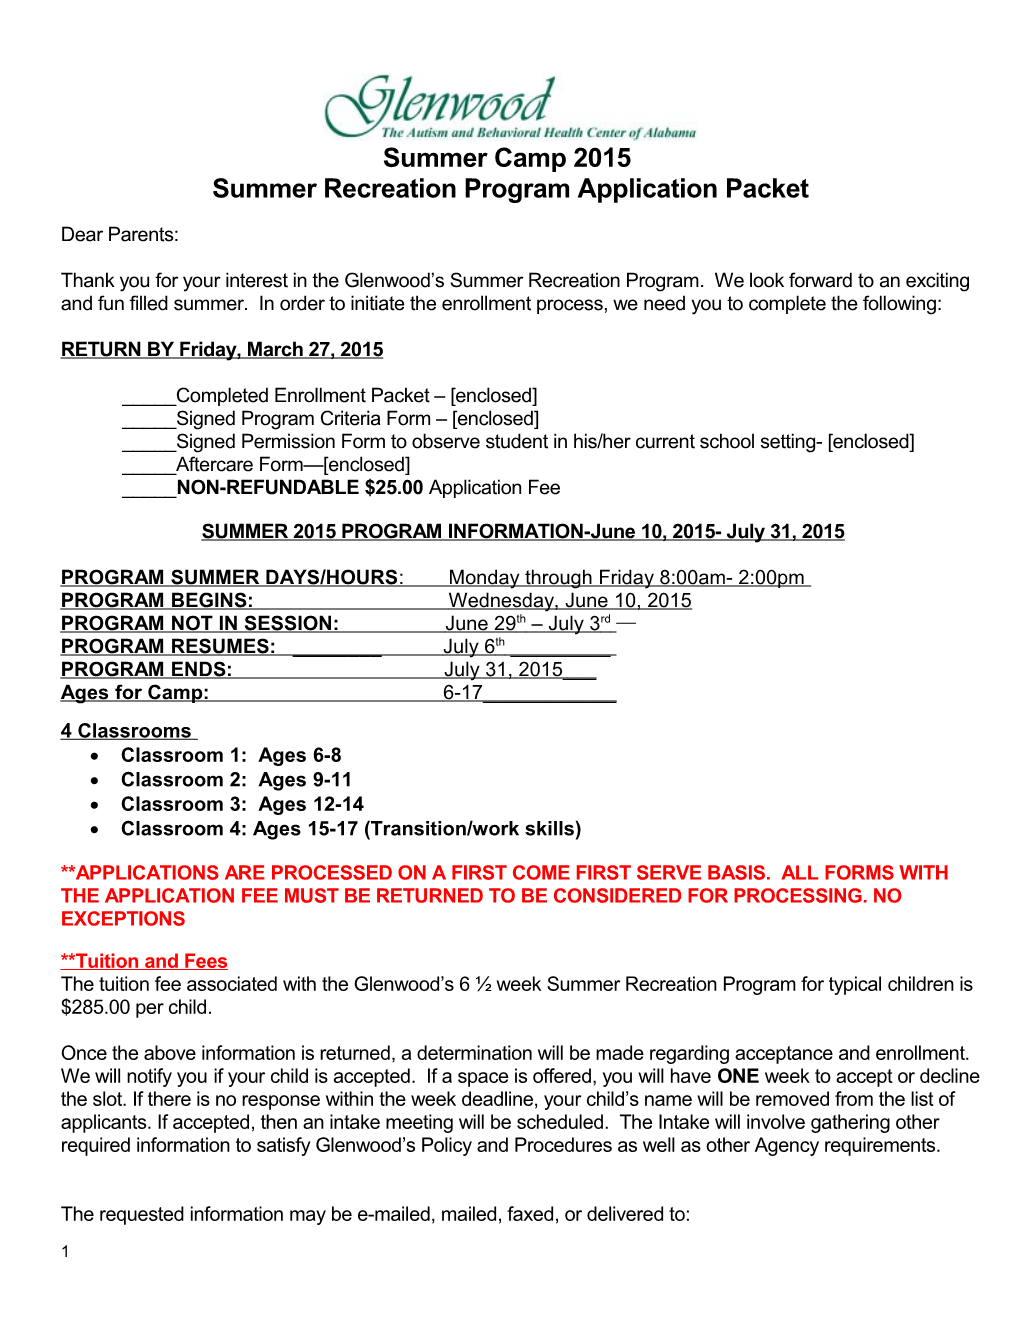 Summer Recreation Program Application Packet